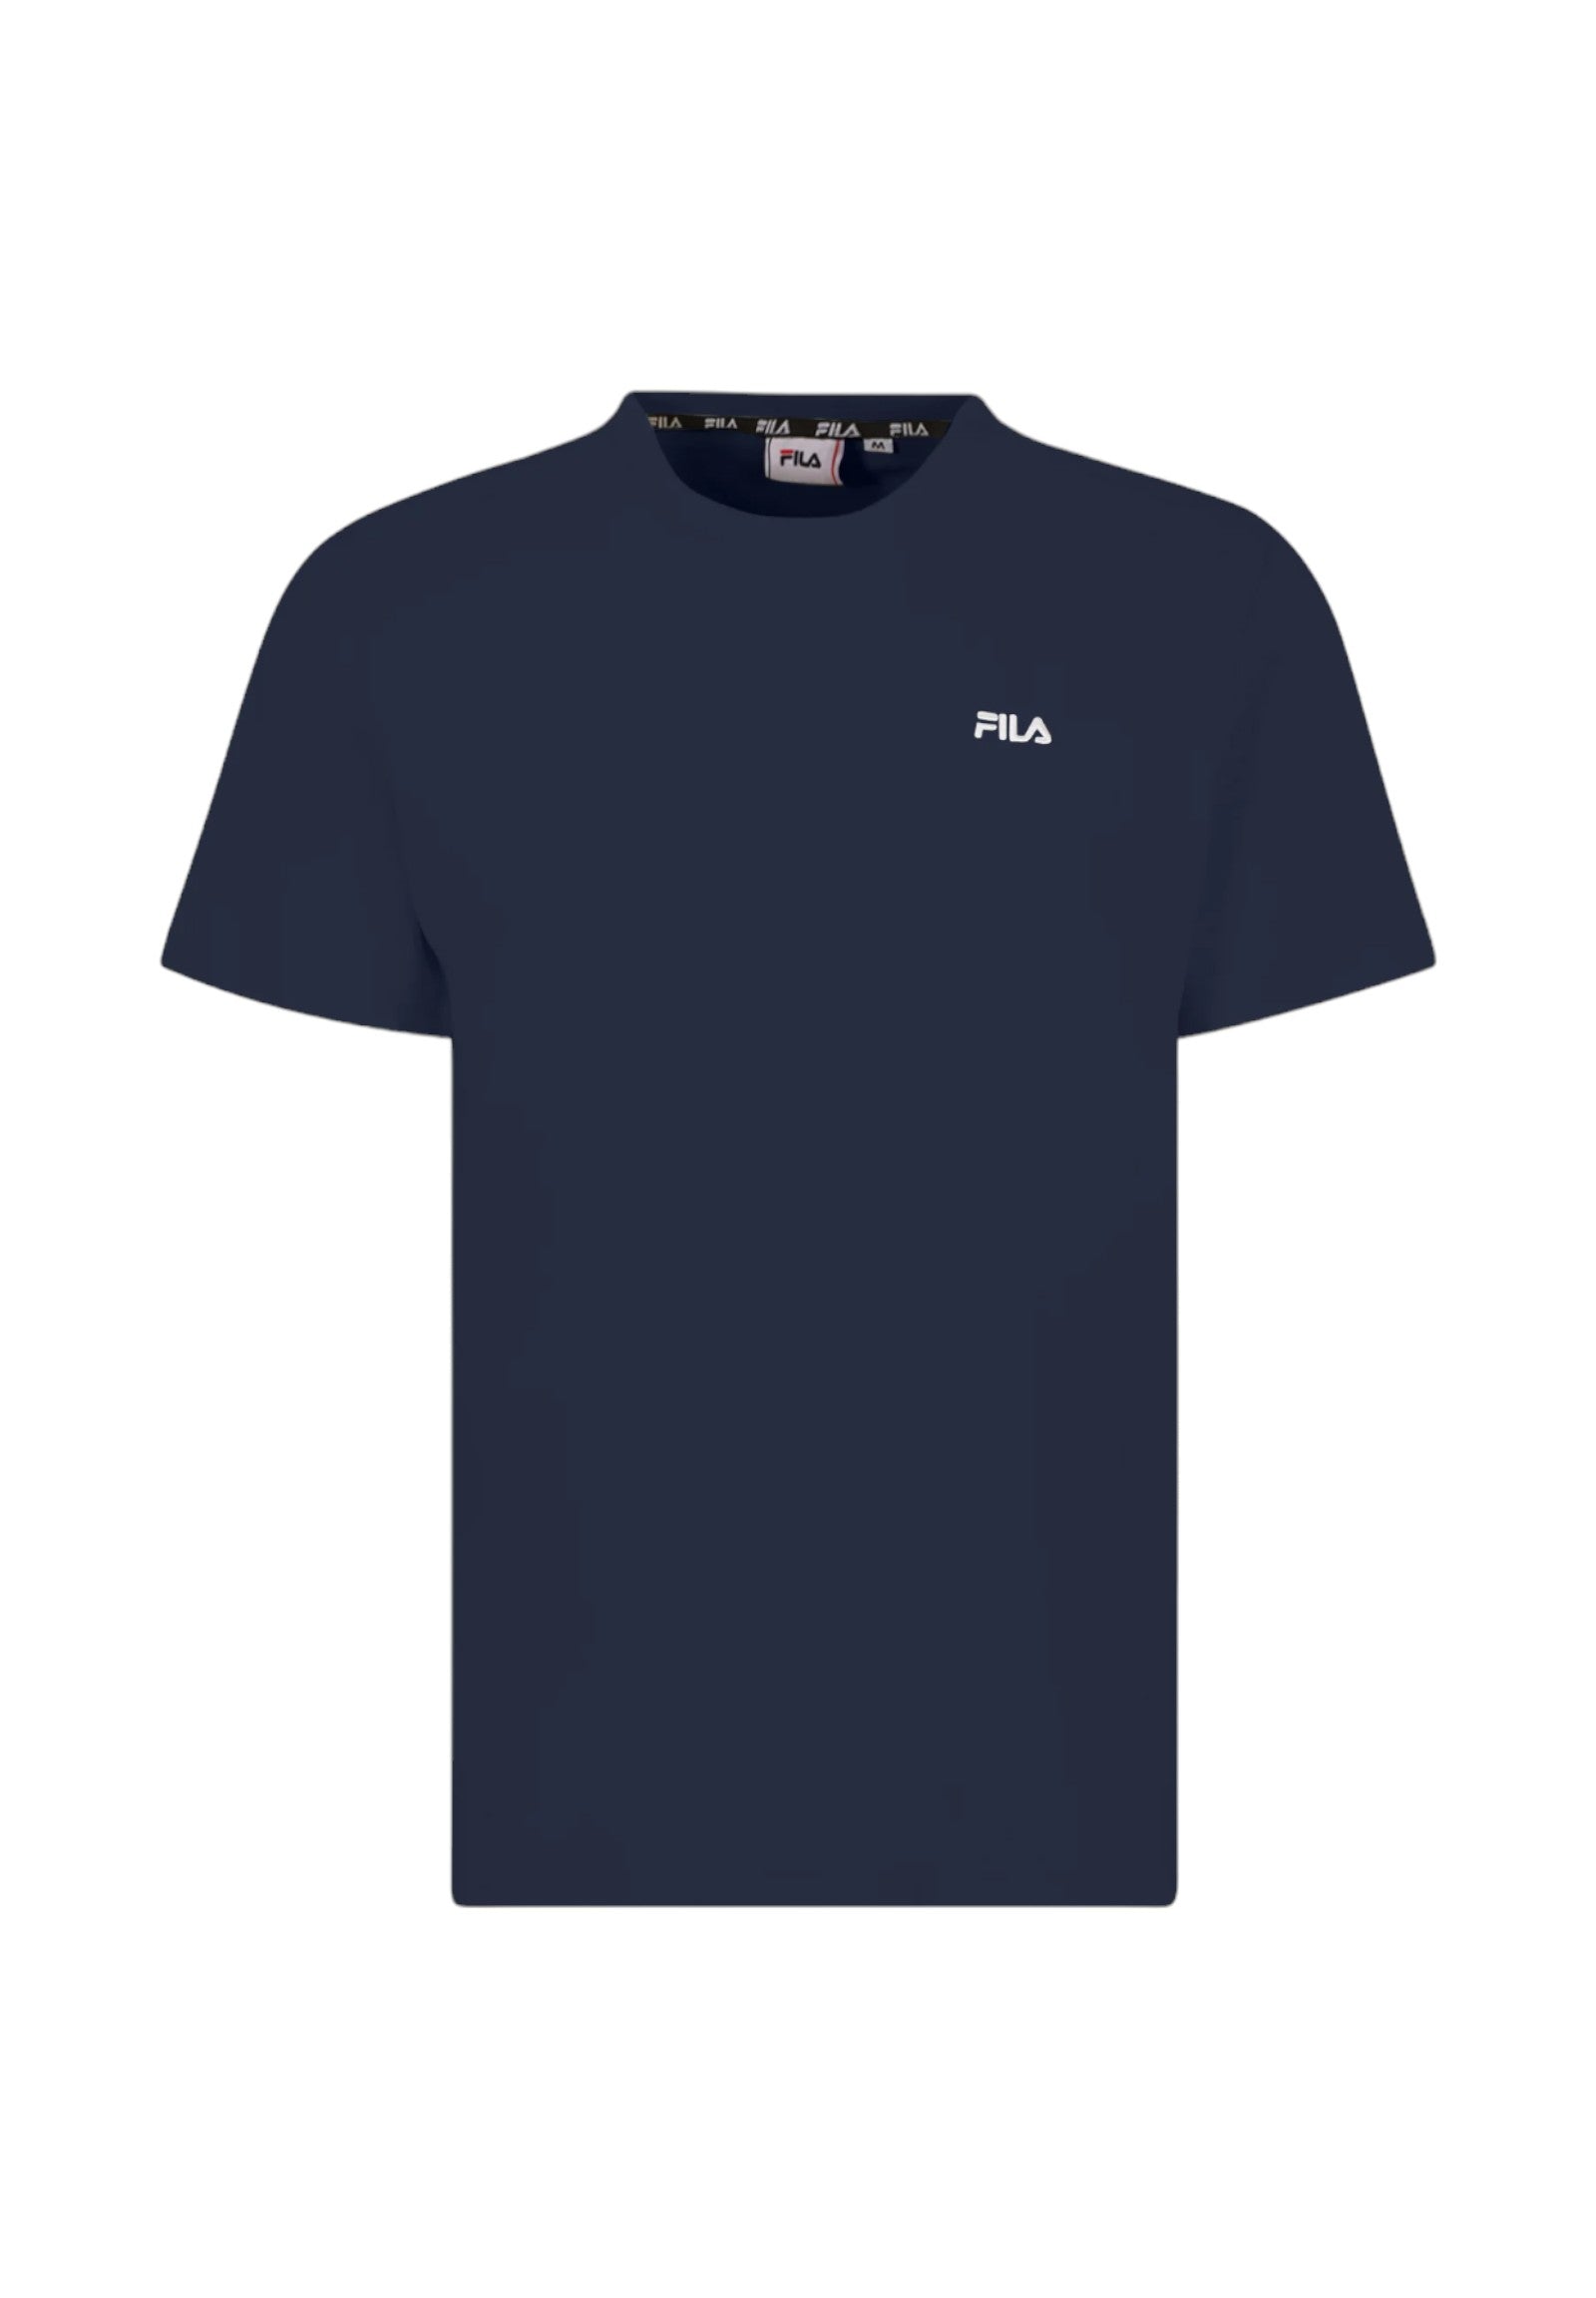 Fila T-Shirt* Fam0340 Black Iris